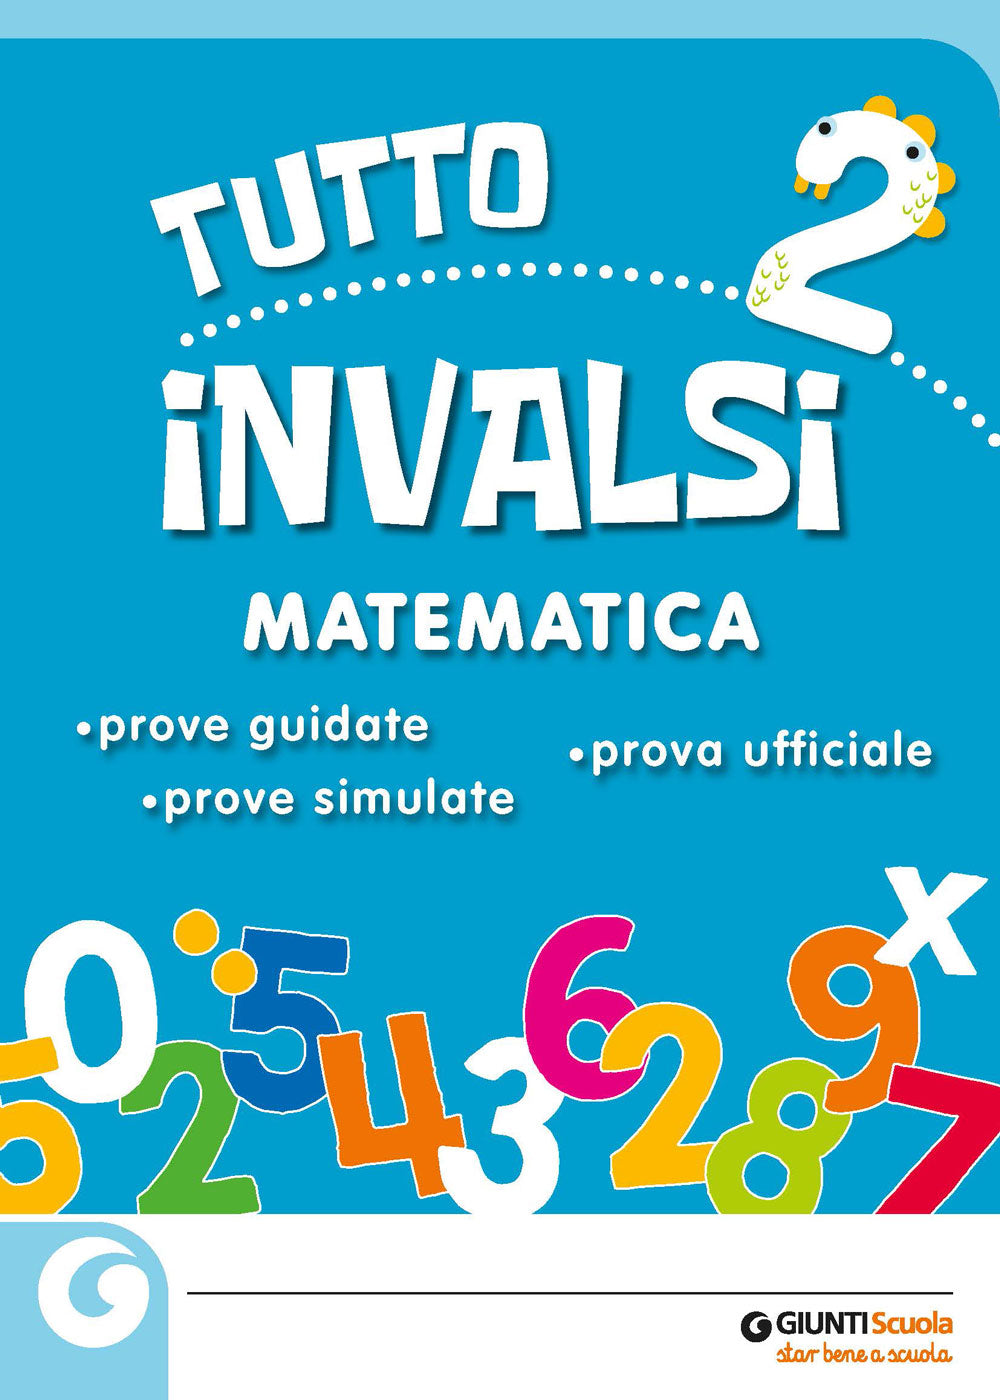 Tutto INVALSI - Matematica 2. Prove guidate - Prove simulate - Prova ufficiale